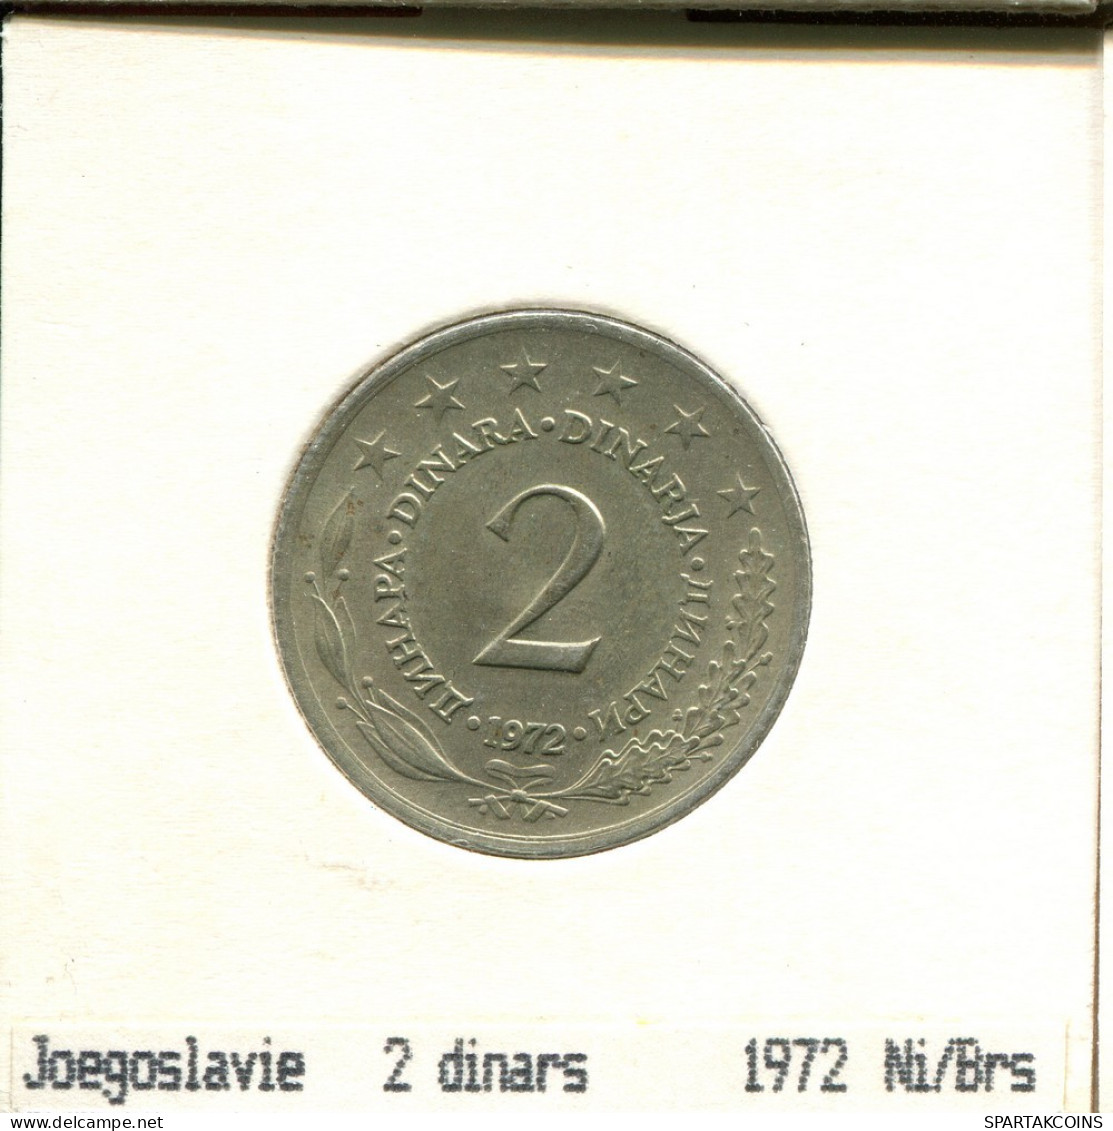 2 DINARA 1972 JUGOSLAWIEN YUGOSLAVIA Münze #AS608.D.A - Yugoslavia